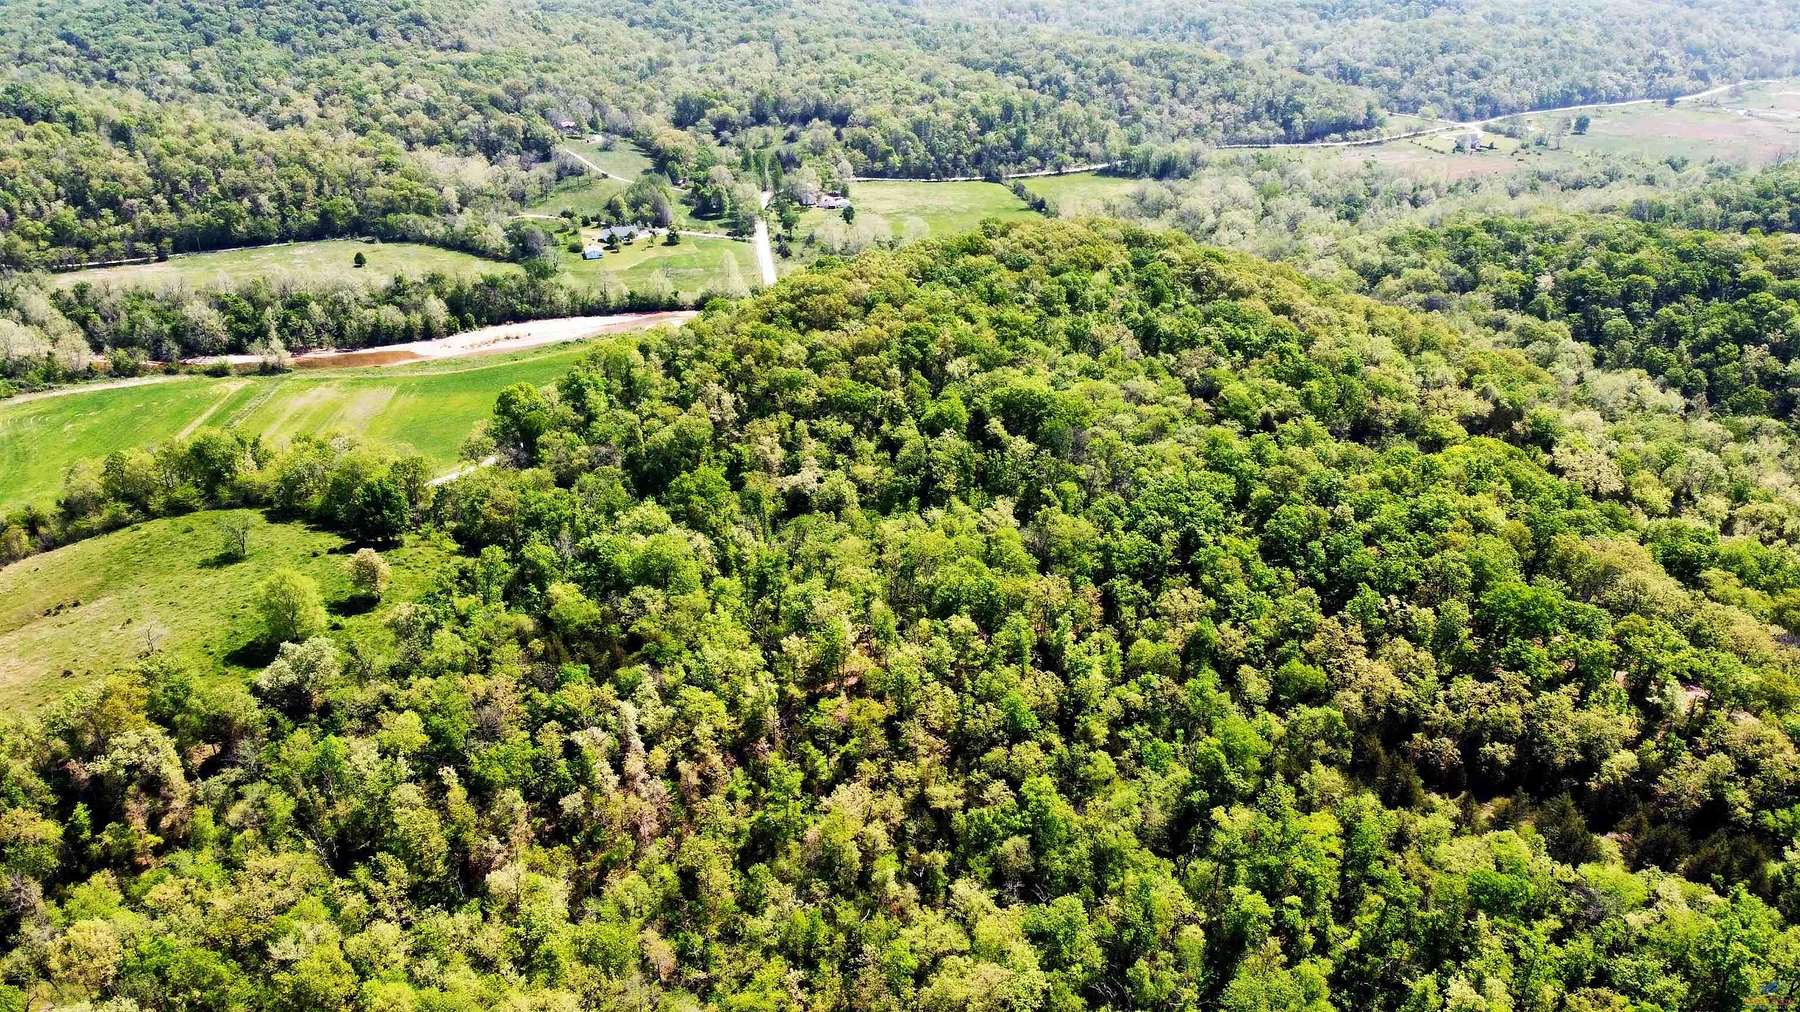 212 Acres of Recreational Land for Sale in Eldon, Missouri